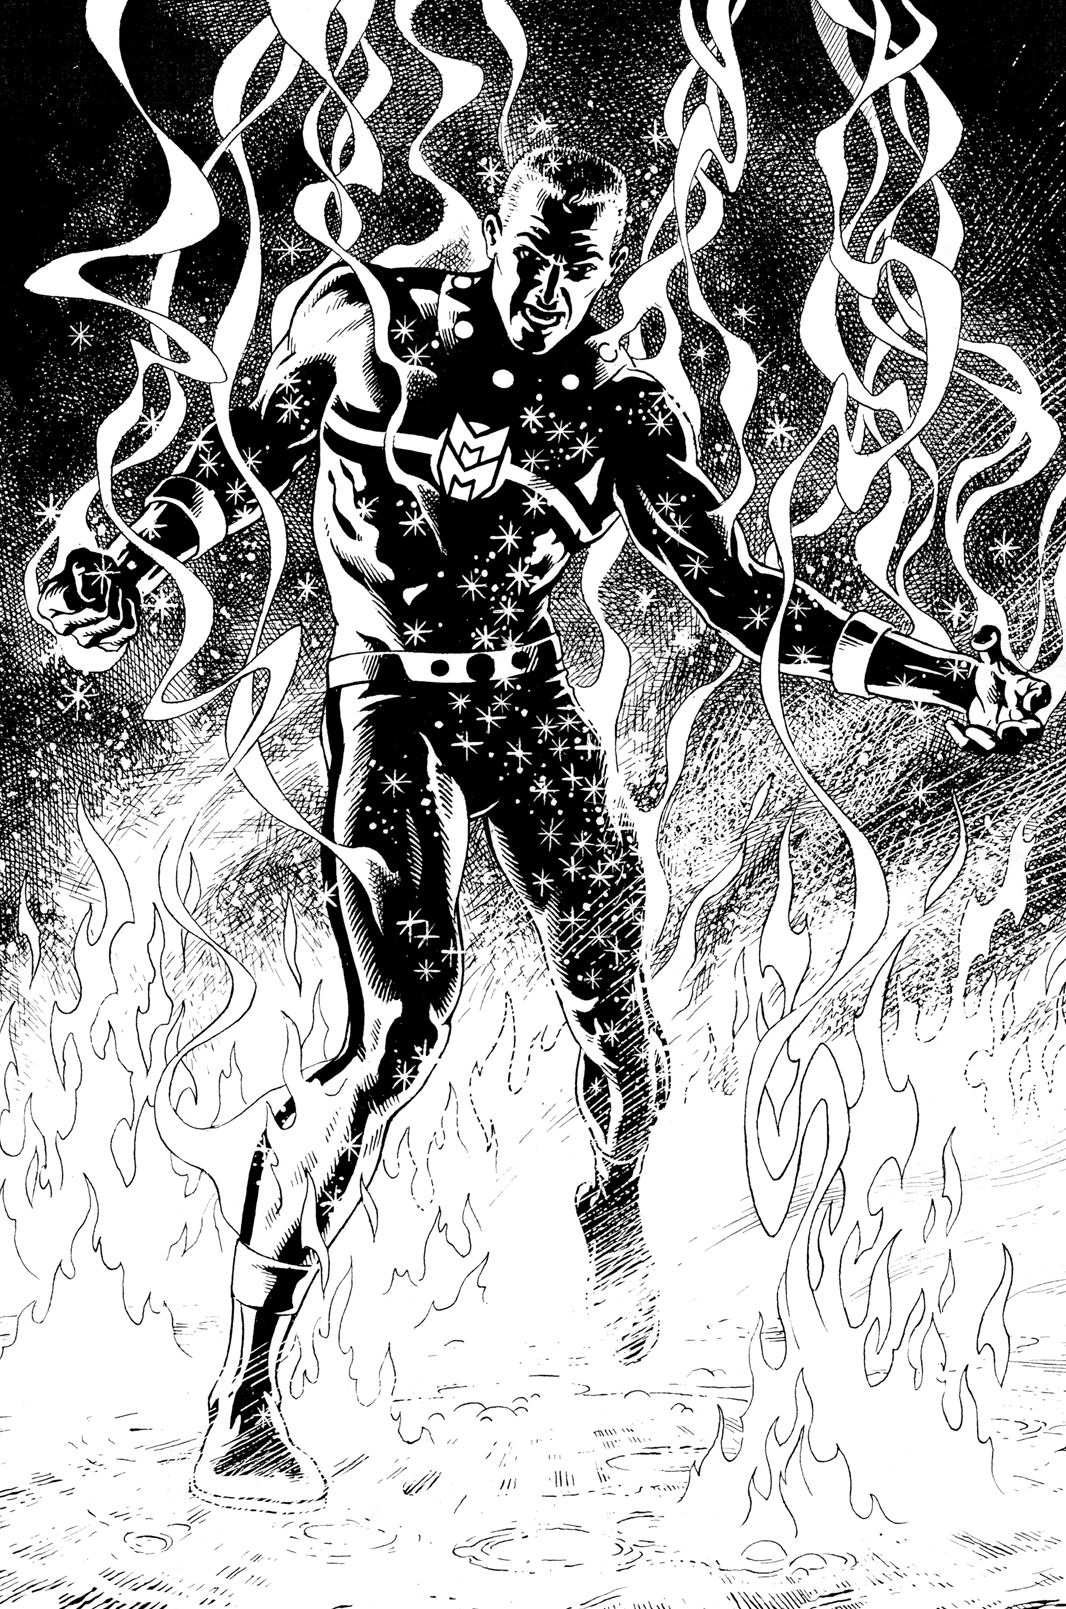 Marvelman by Garry Leach